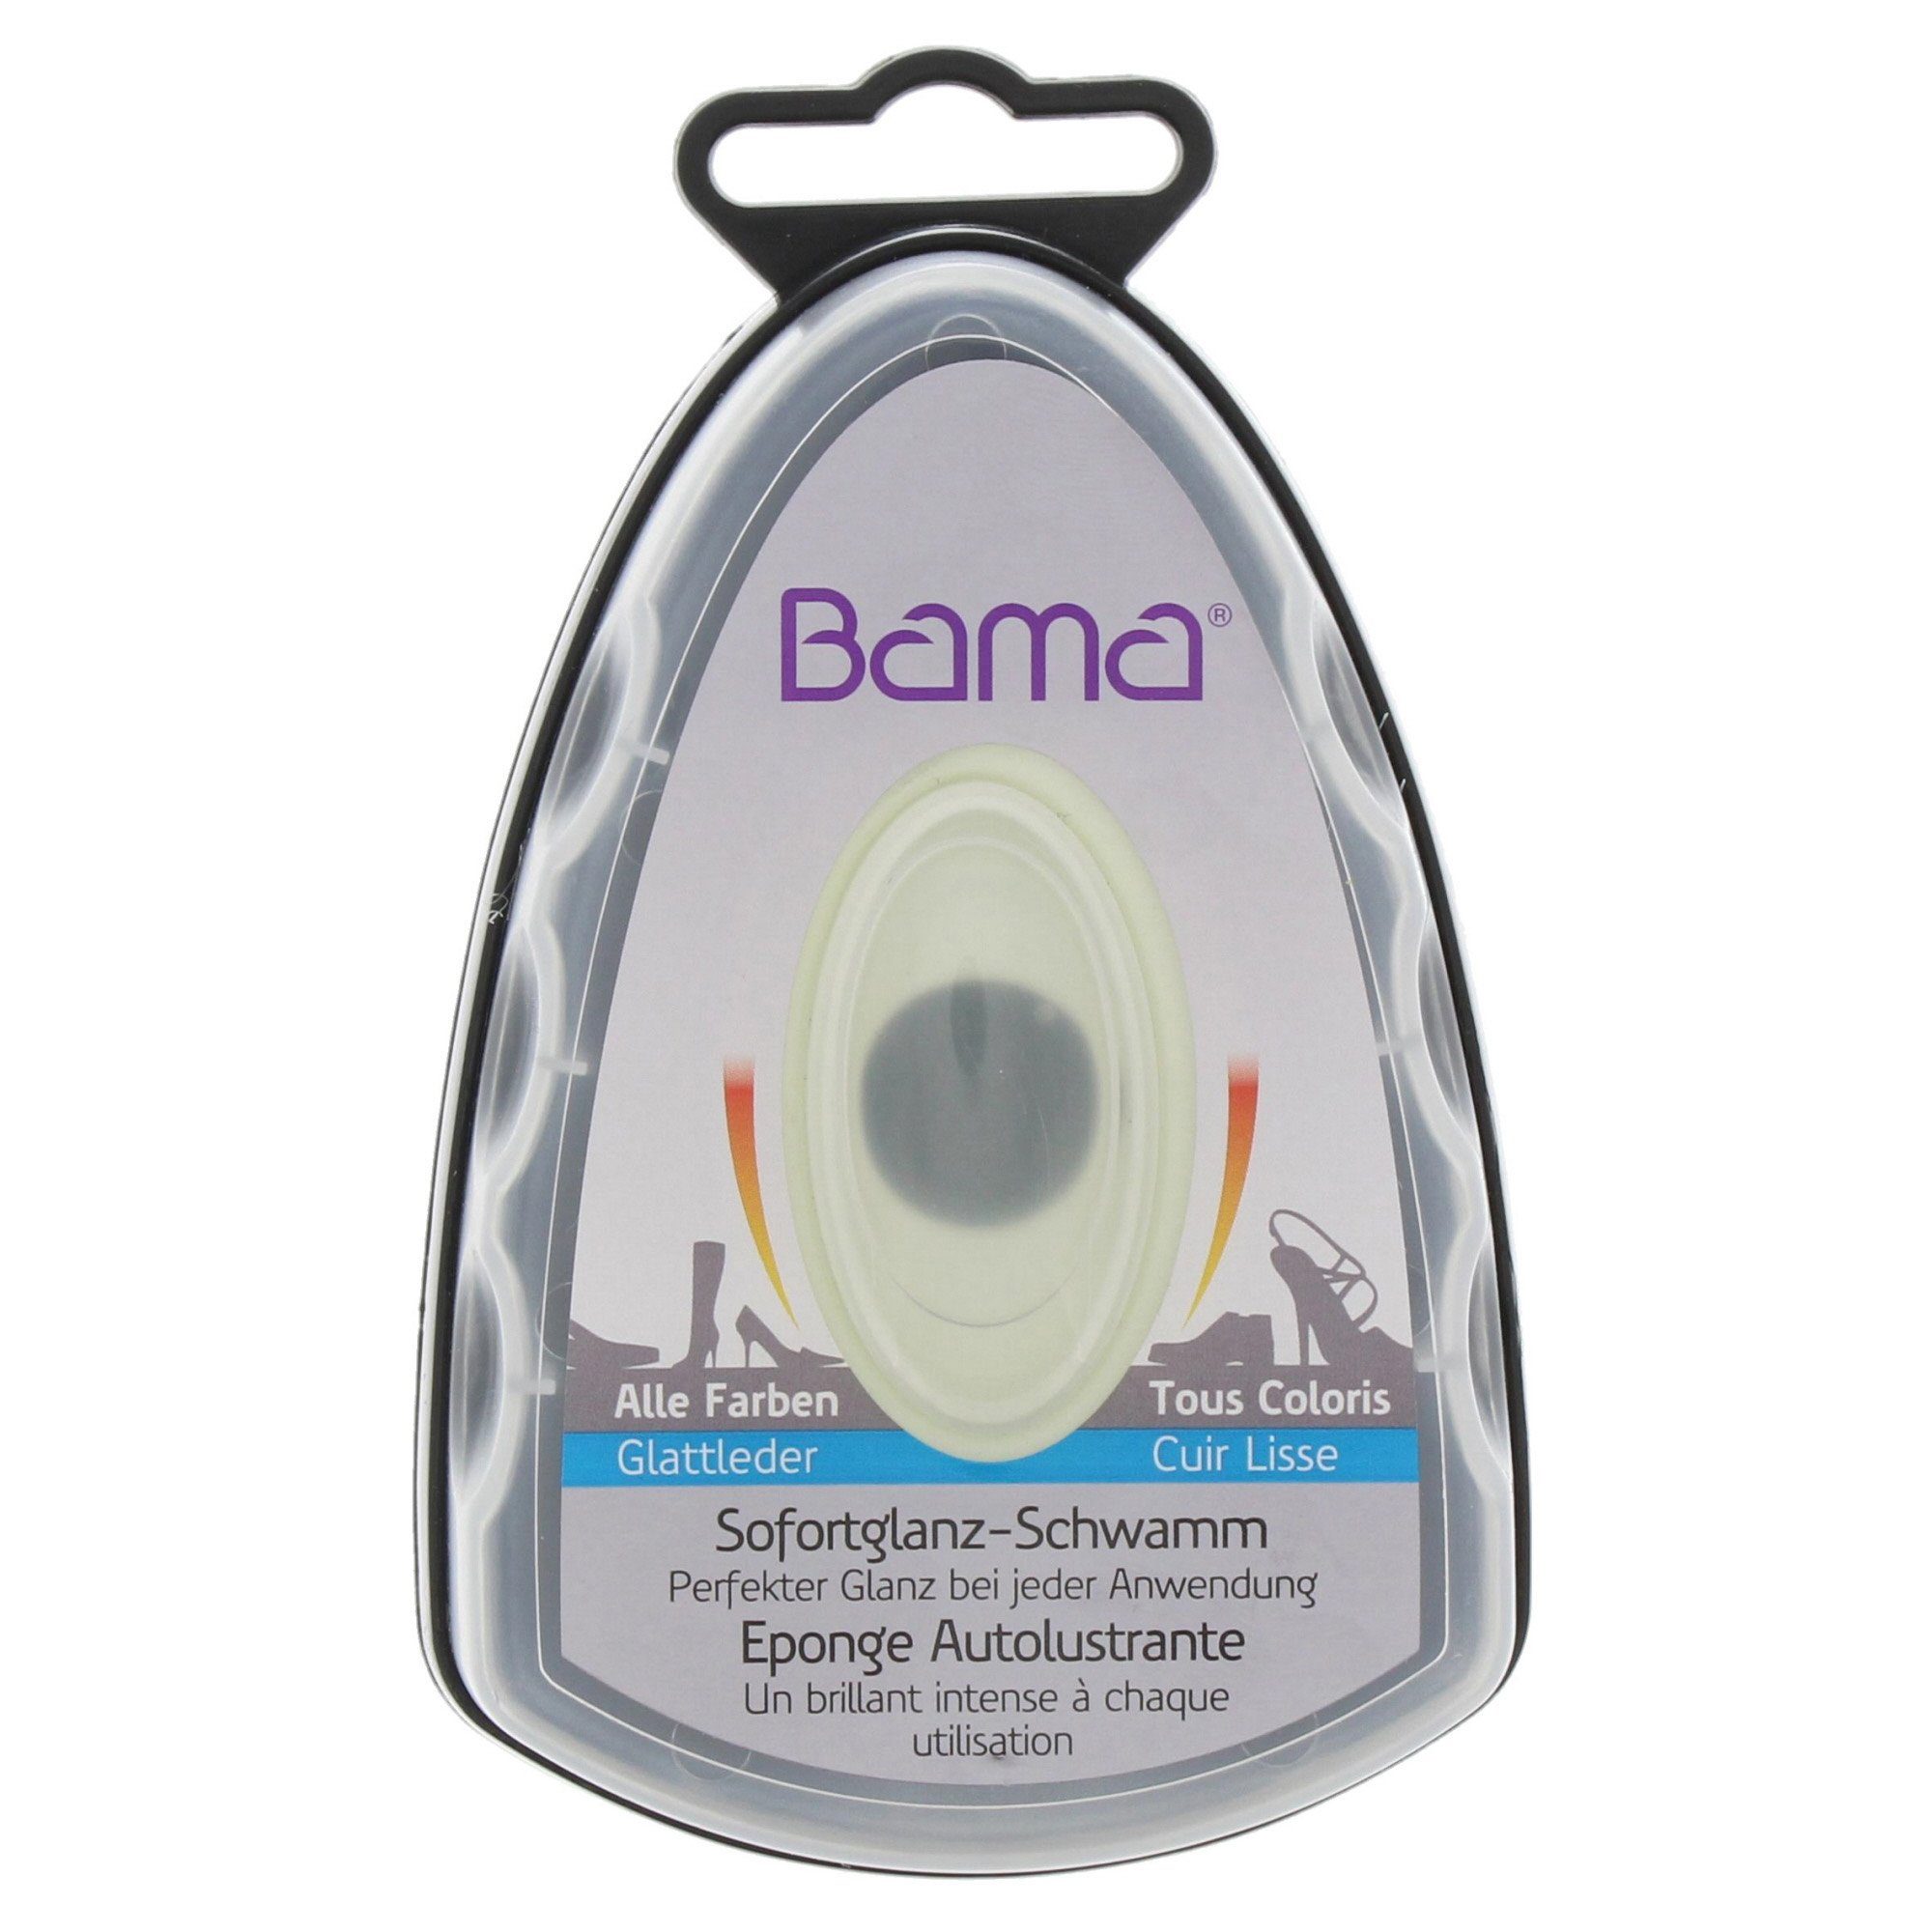 BAMA Group Schuhputzbürste Sofortglanzschwamm - perfekter Glanz bei jeder Anwendung Farblos